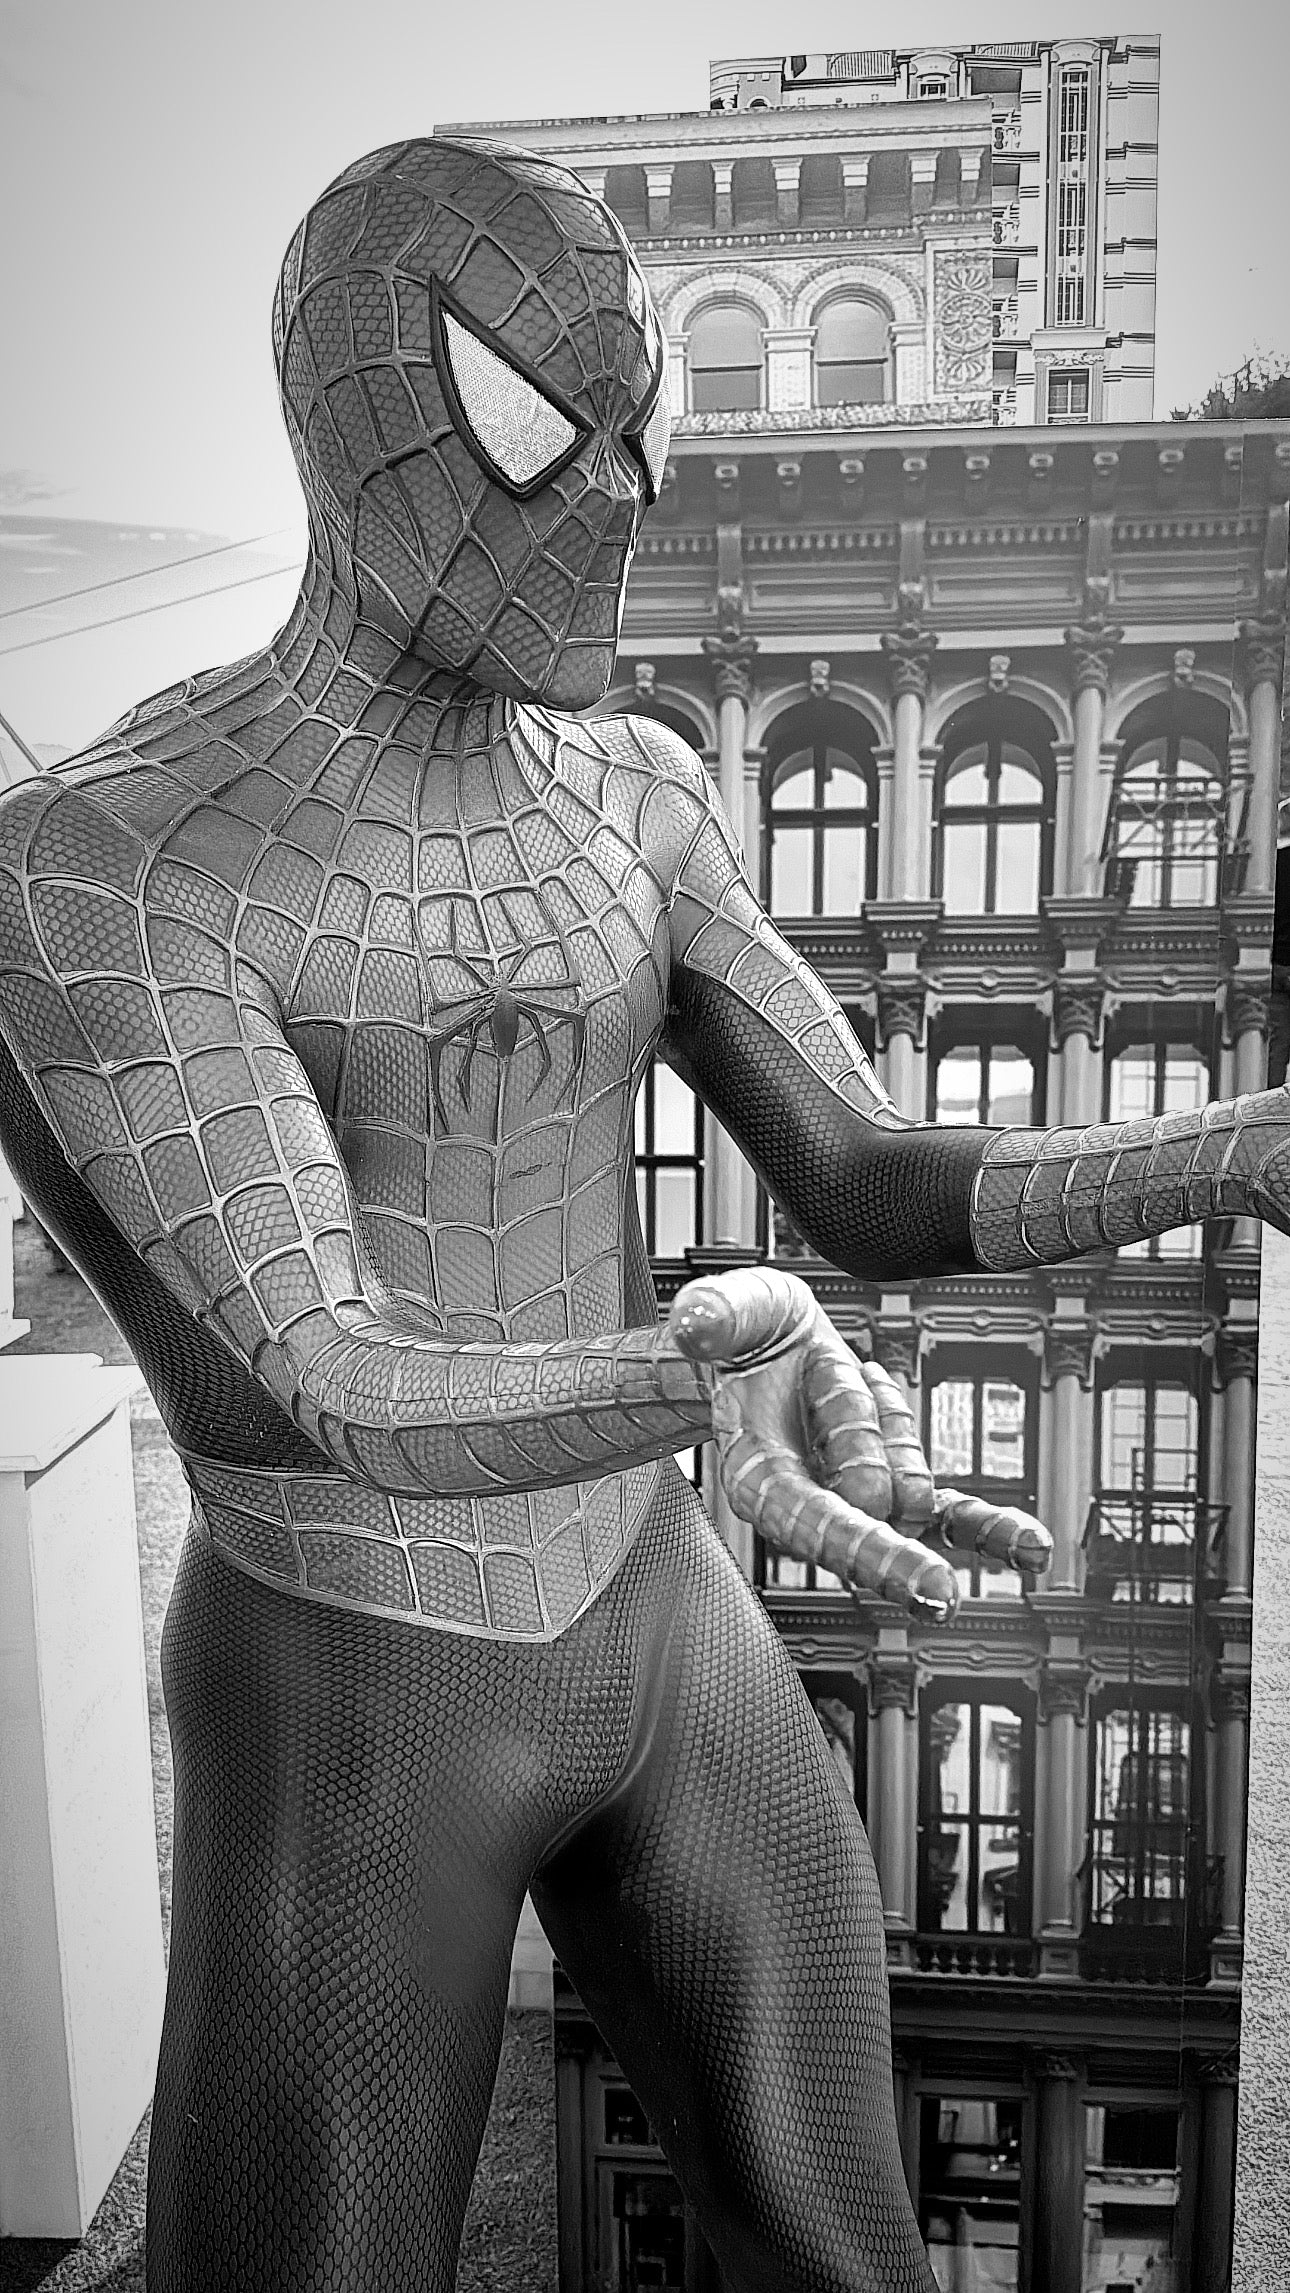 Spider Man Life Size